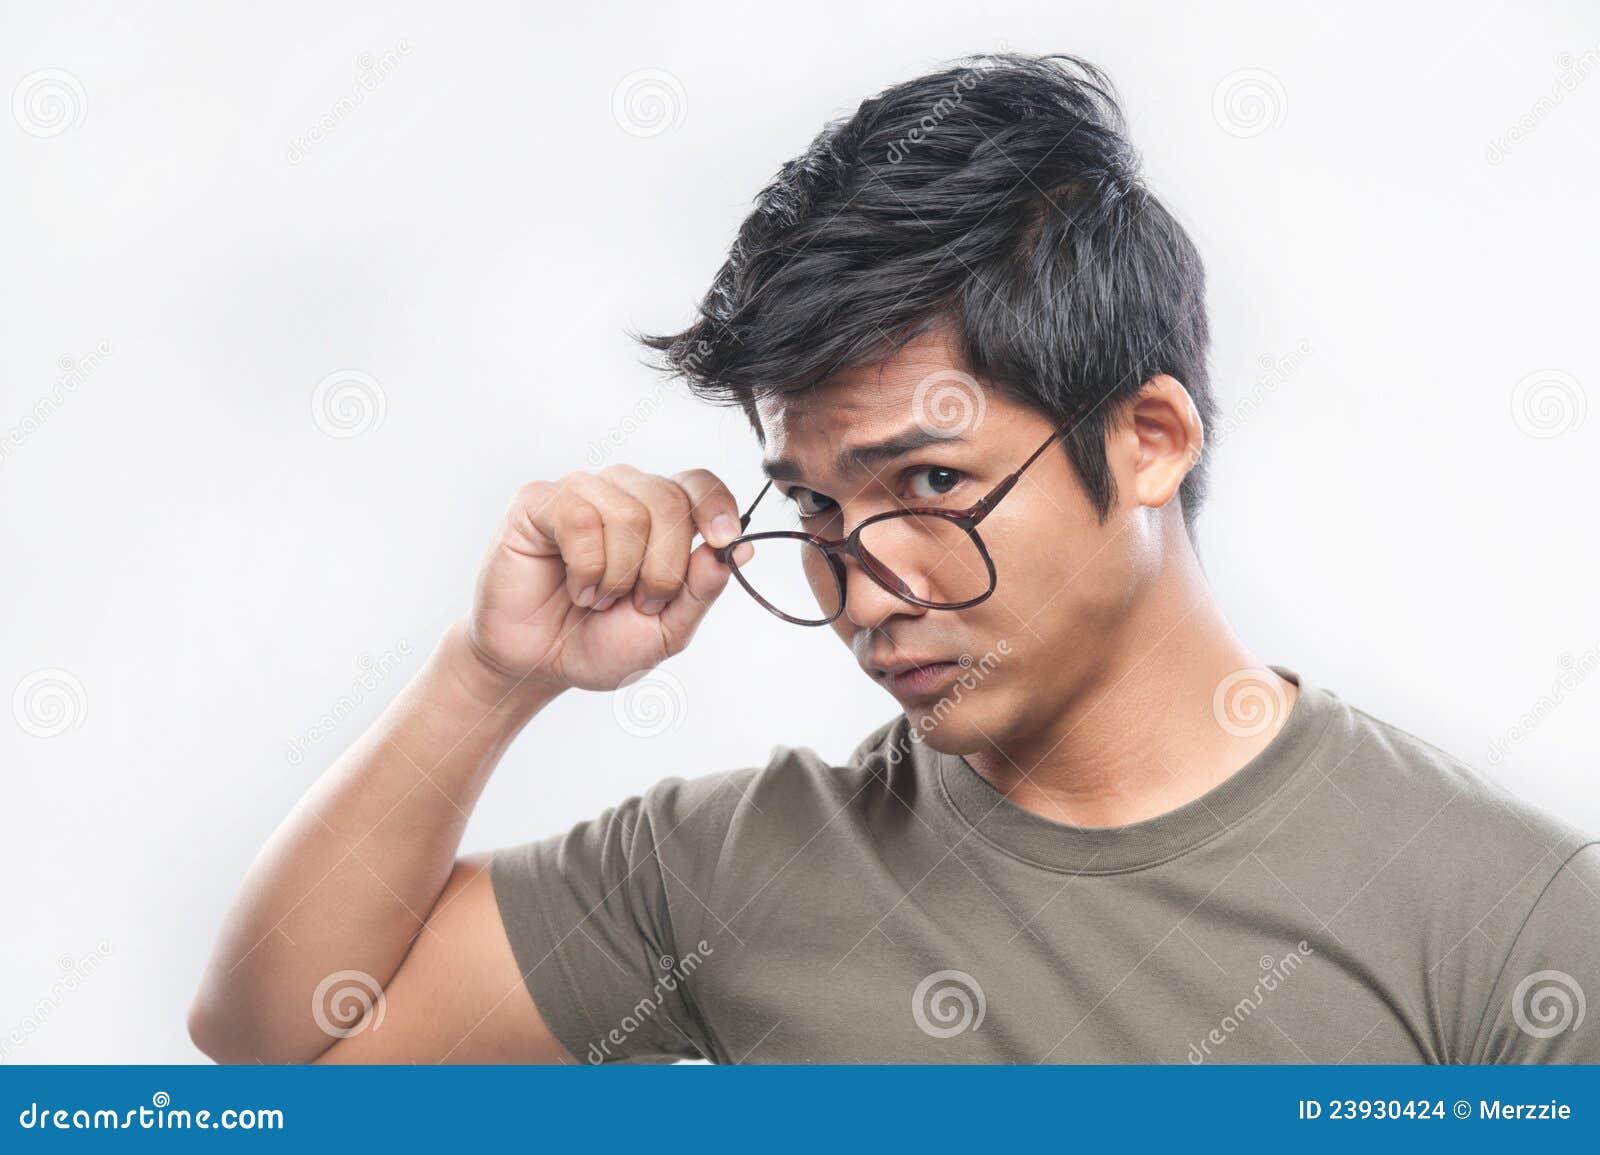 Asian Man Holding Nerdy Glasses Stock Images Image 23930424